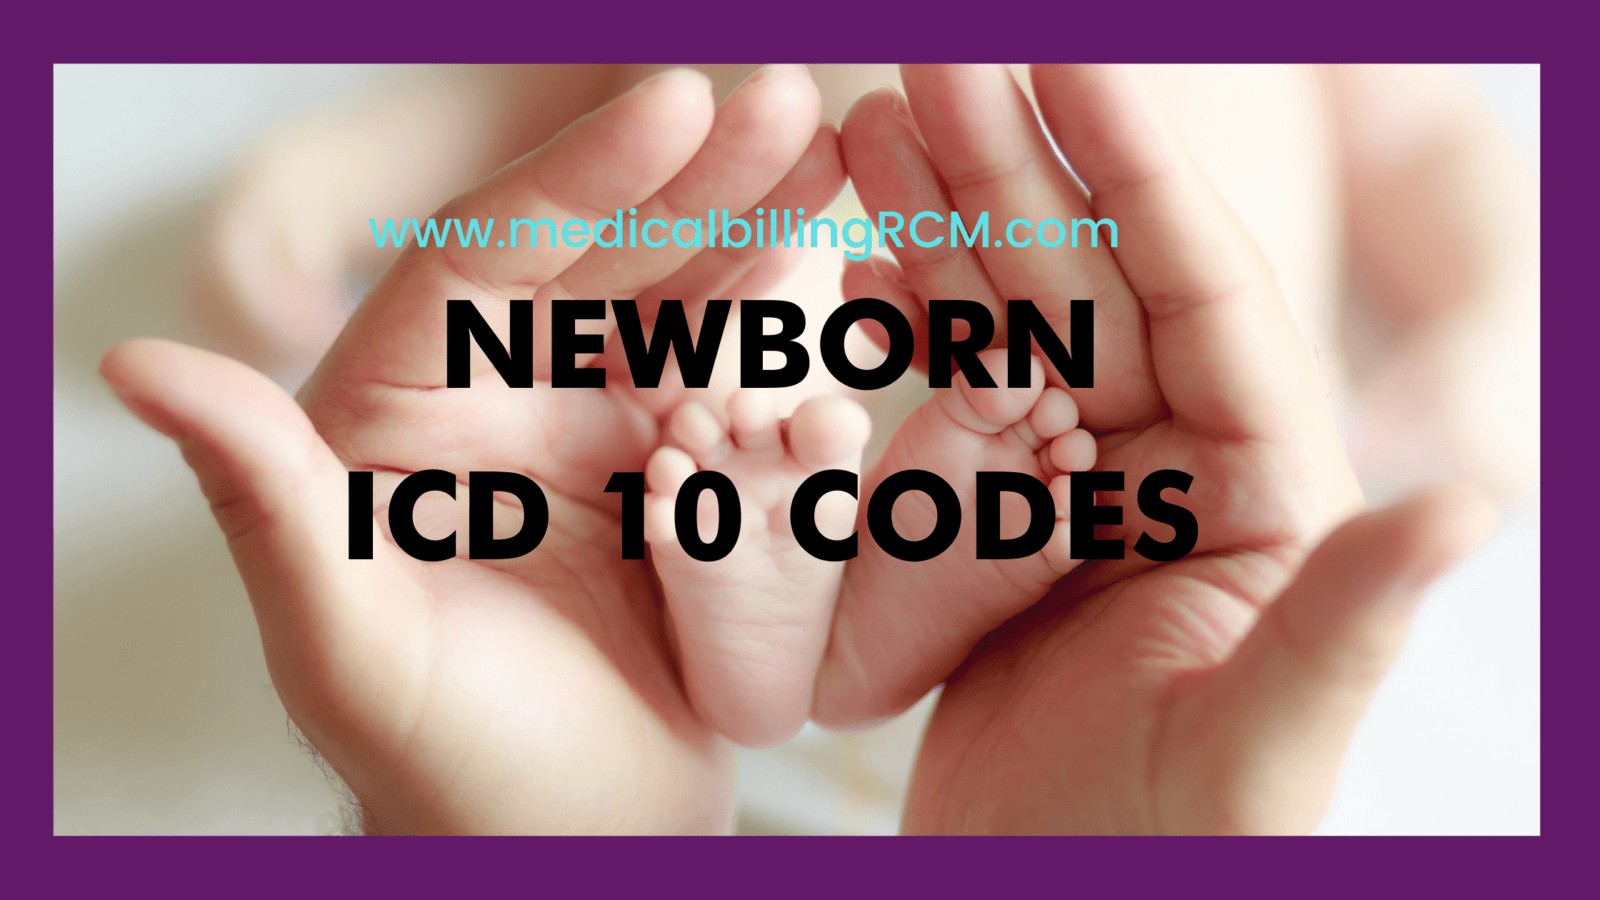 Newborn ICD 10 codes in medical billing